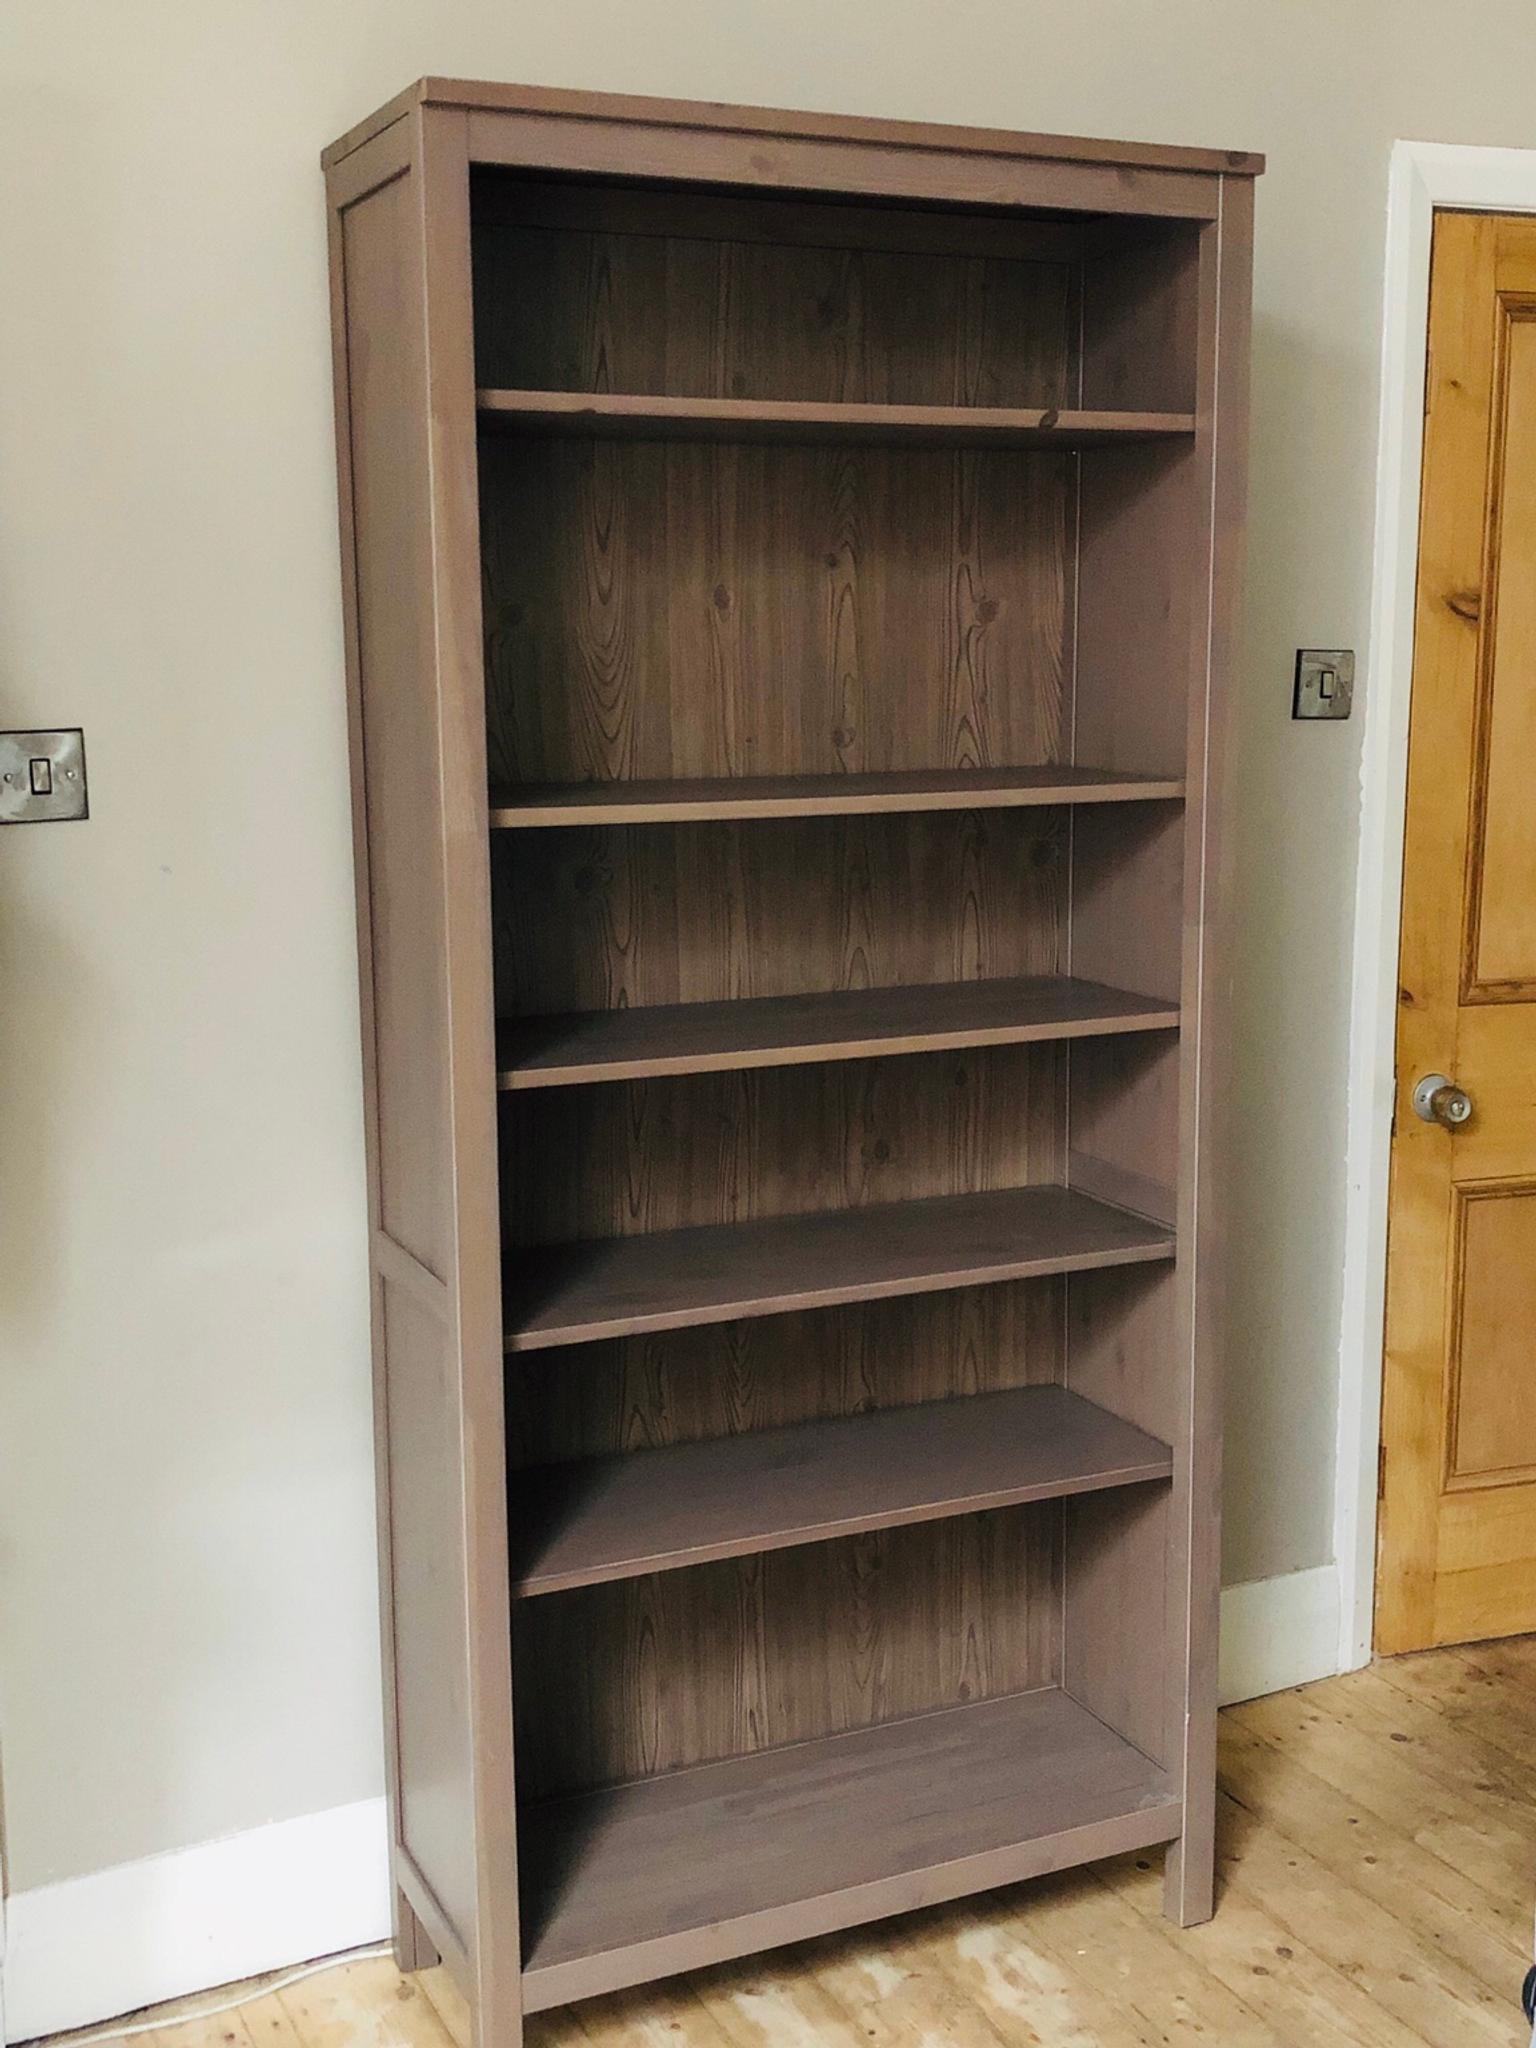 Ikea Hemnes Bookcase 90cm X 197cm Eccles In Salford For 40 00